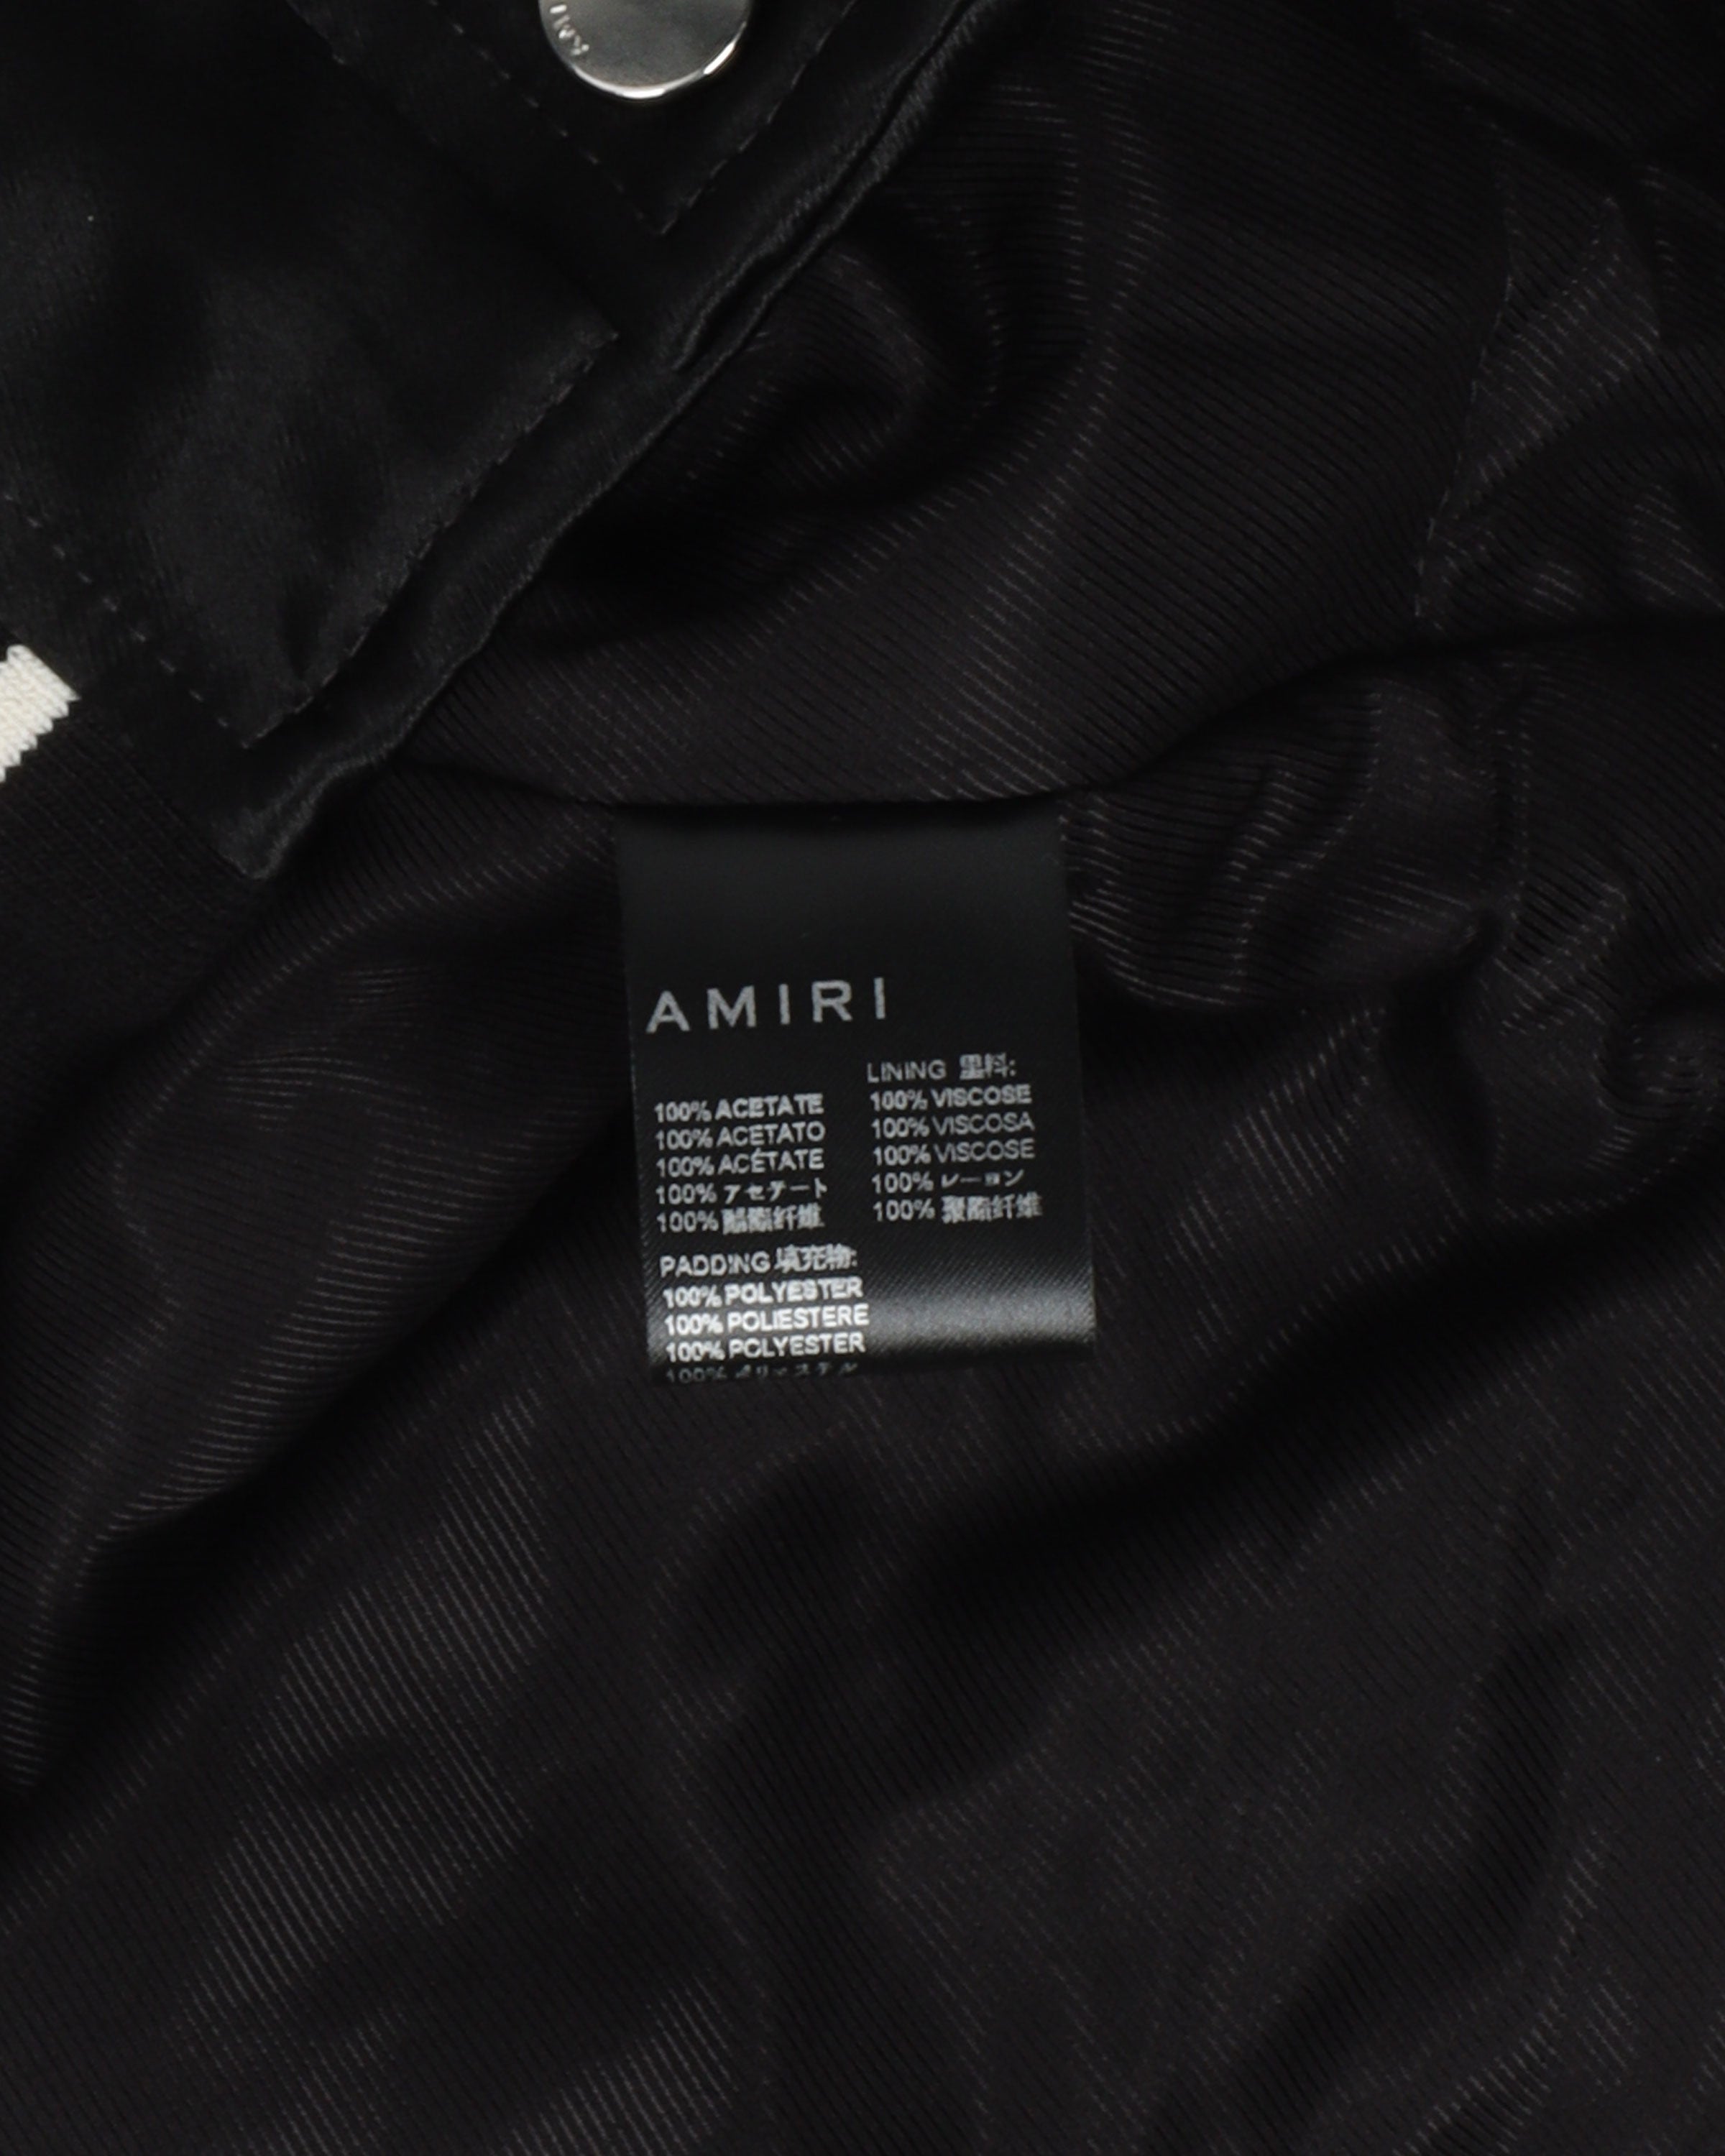 Amiri Black Satin Flame Souvenir Jacket